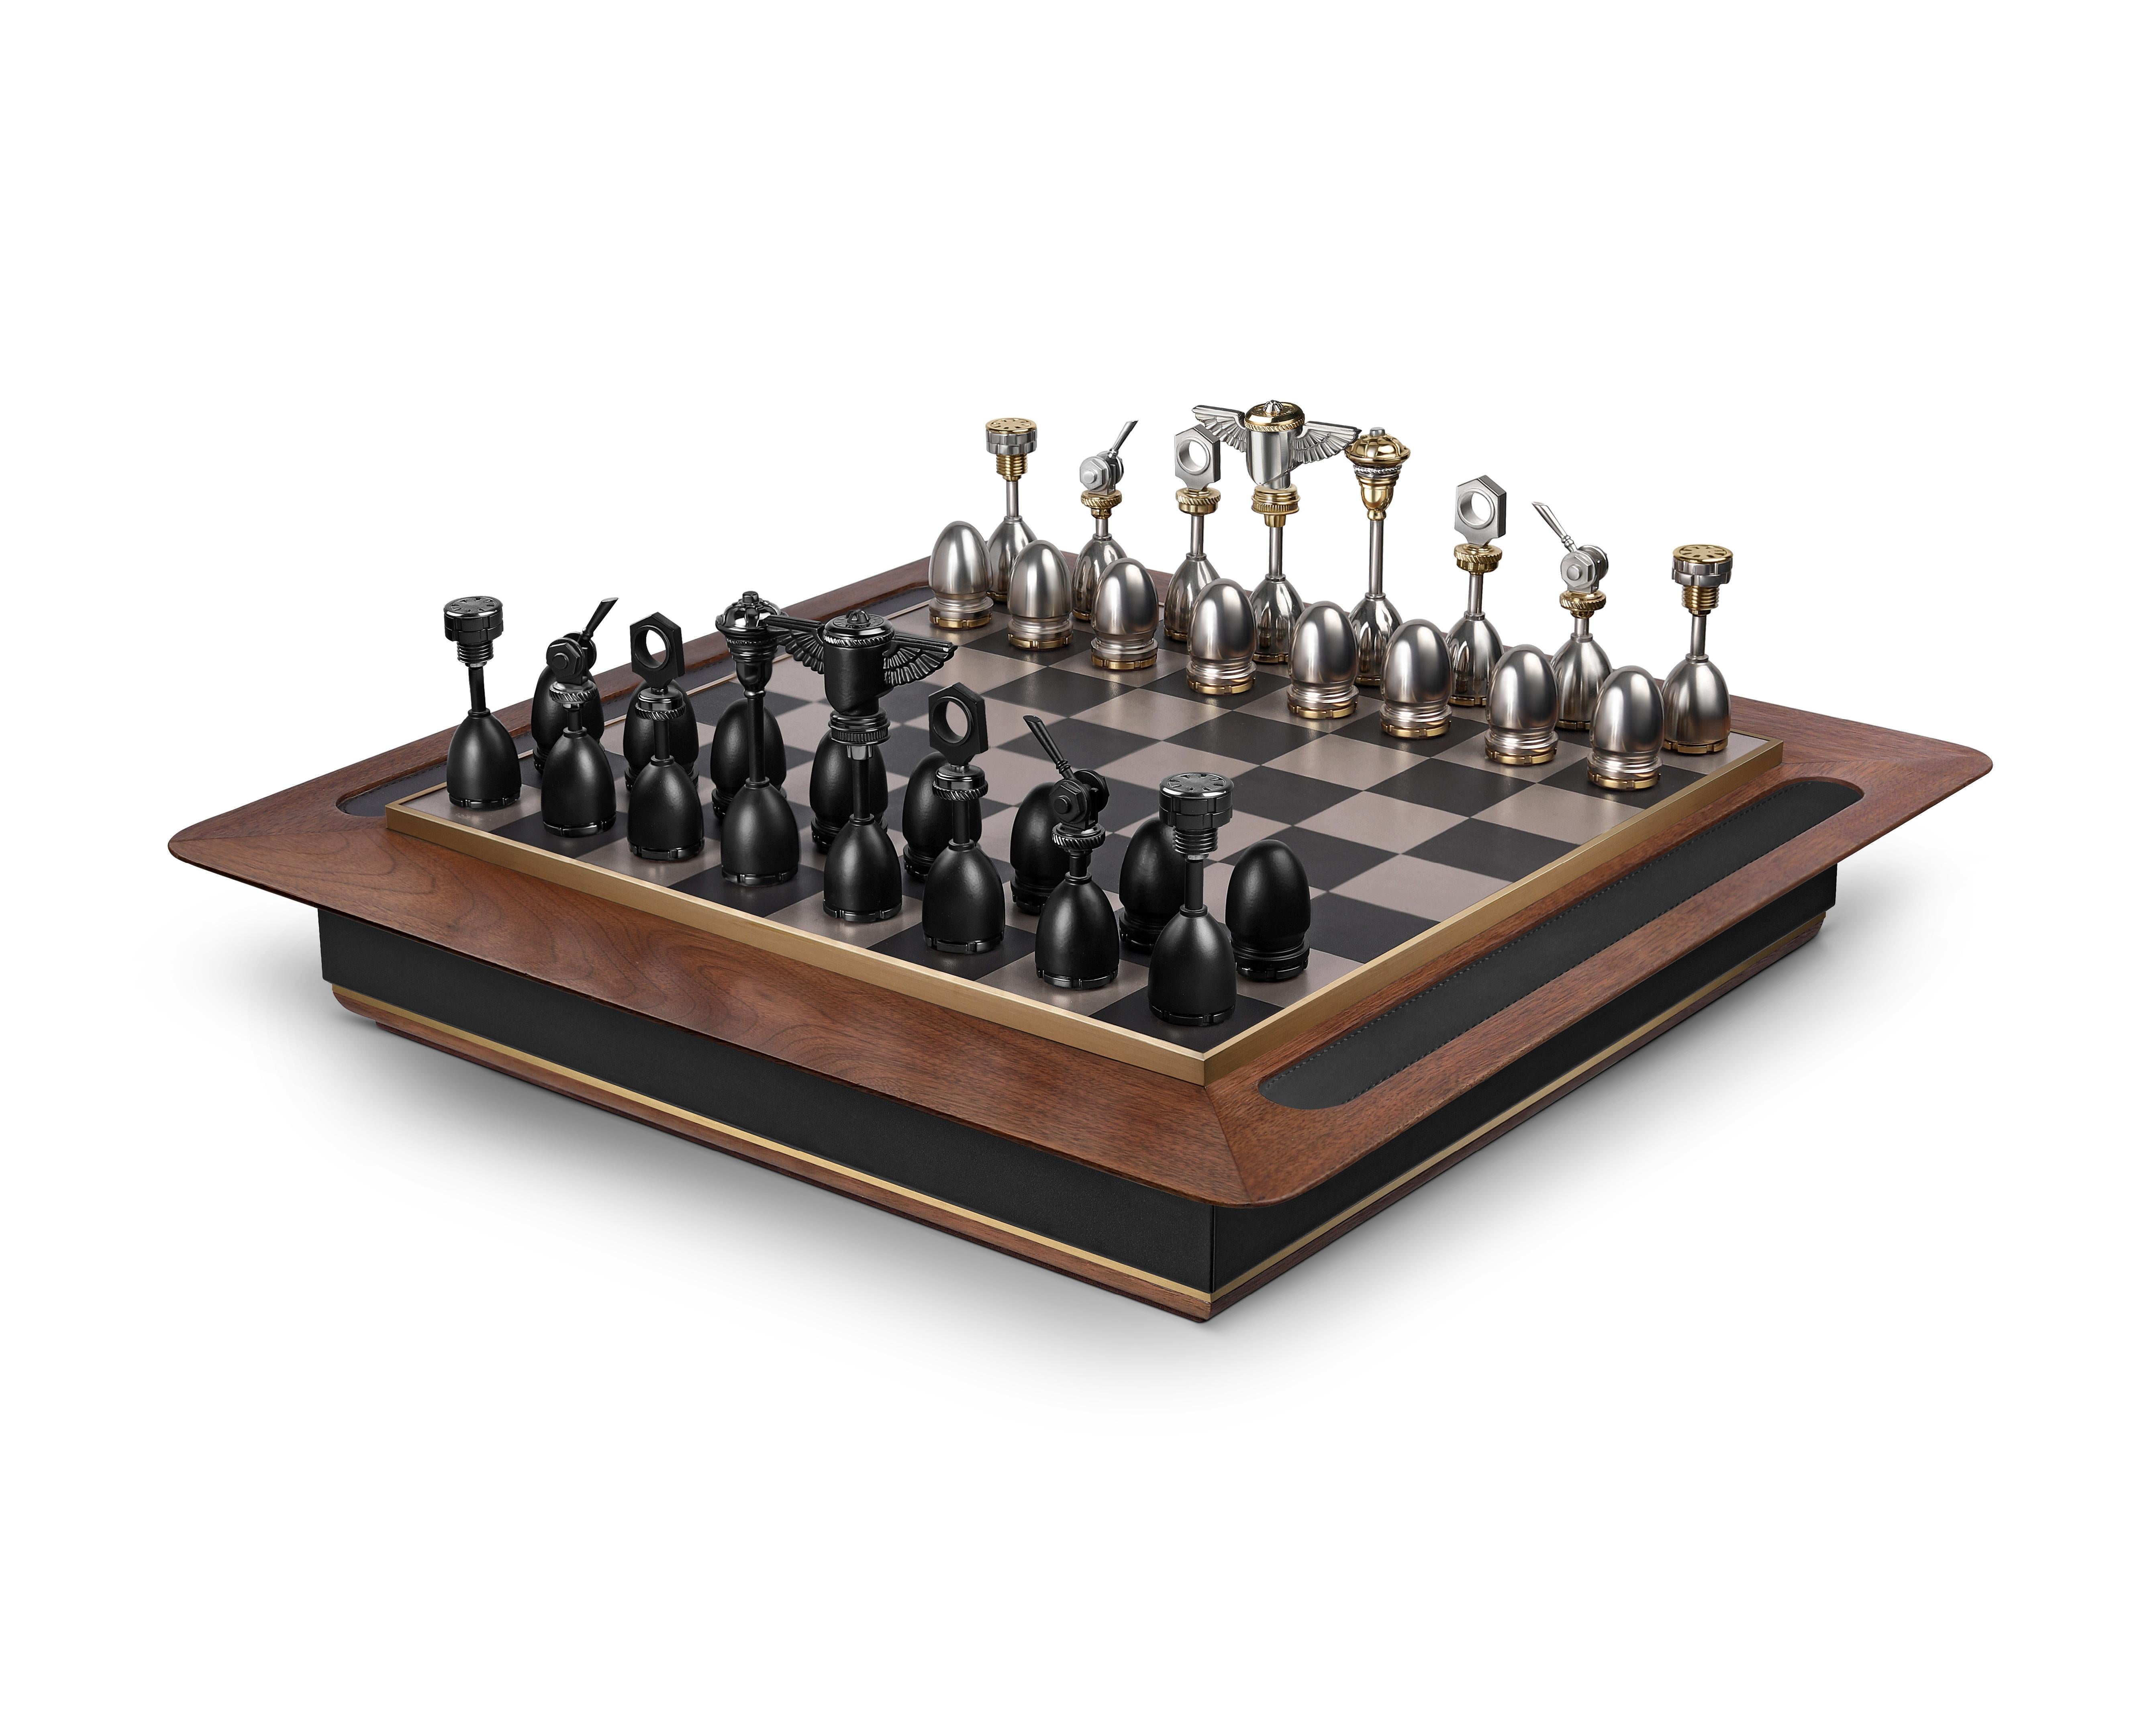 3L Shatranj Chess Set by Madheke For Sale at 1stDibs